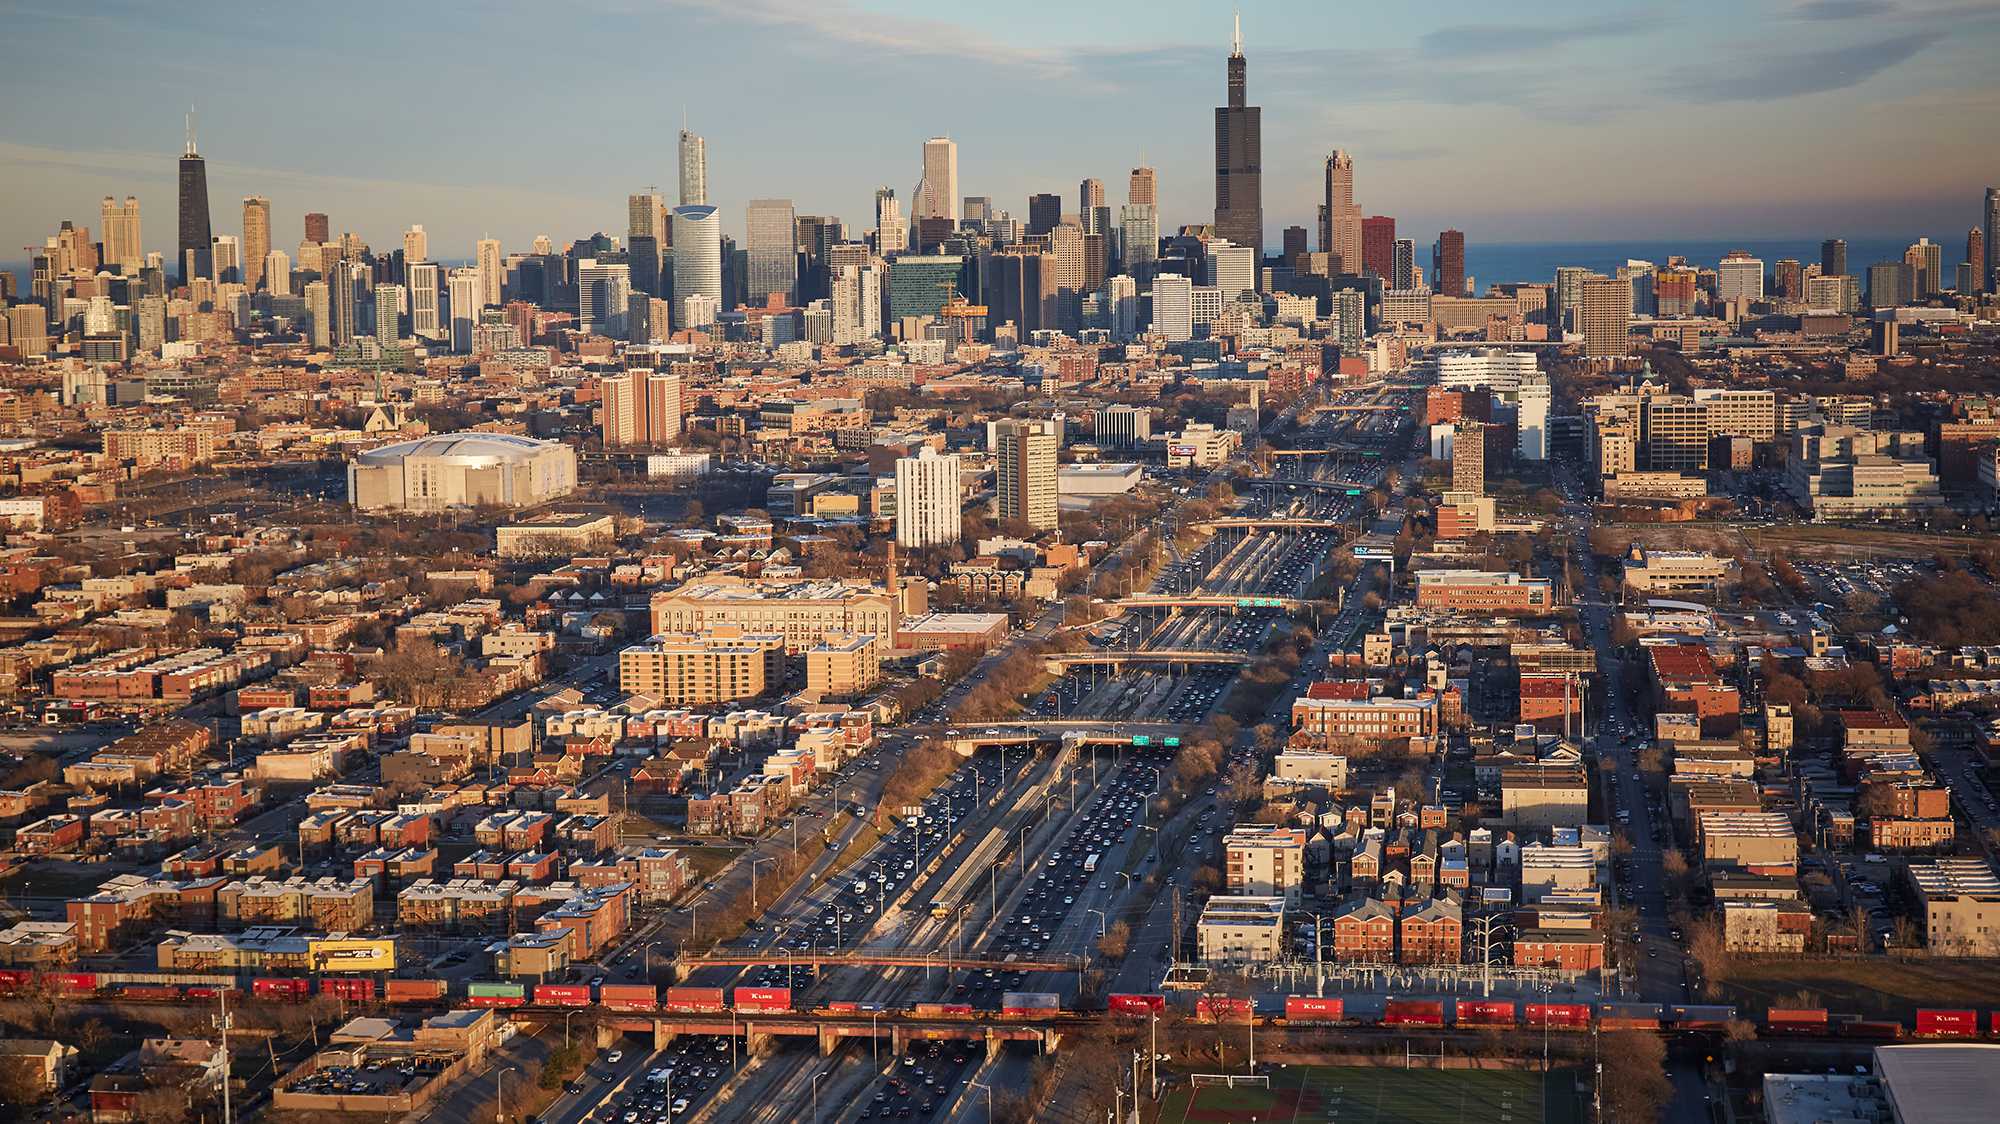 Chicago region transportation system from above.